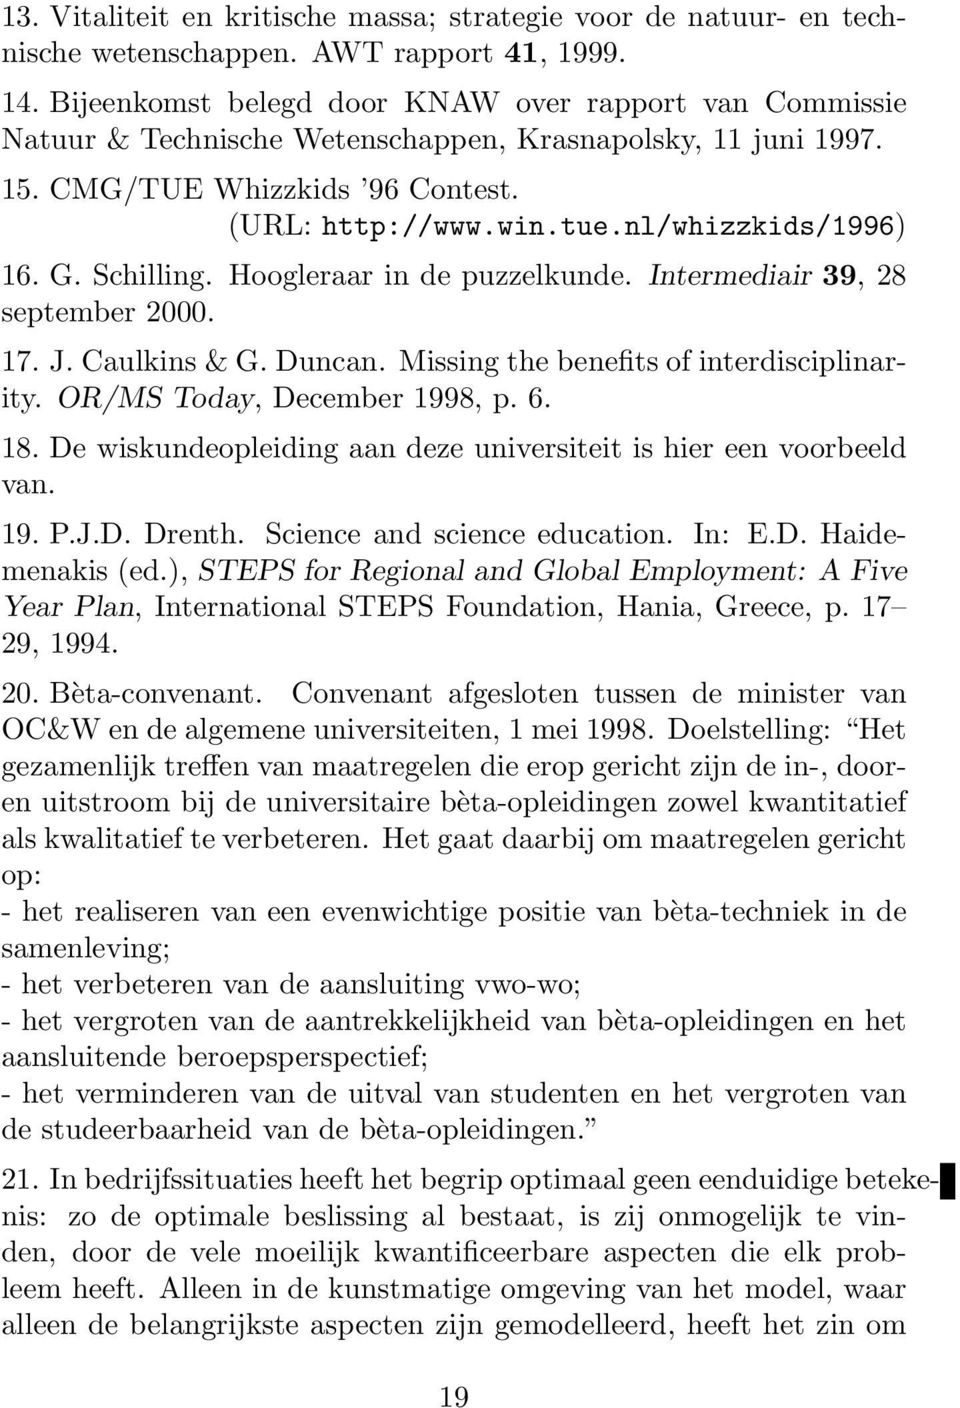 G. Schilling. Hoogleraar in de puzzelkunde. Intermediair 39, 28 september 2000. 17. J. Caulkins & G. Duncan. Missing the benefits of interdisciplinarity. OR/MS Today, December 1998, p. 6. 18.